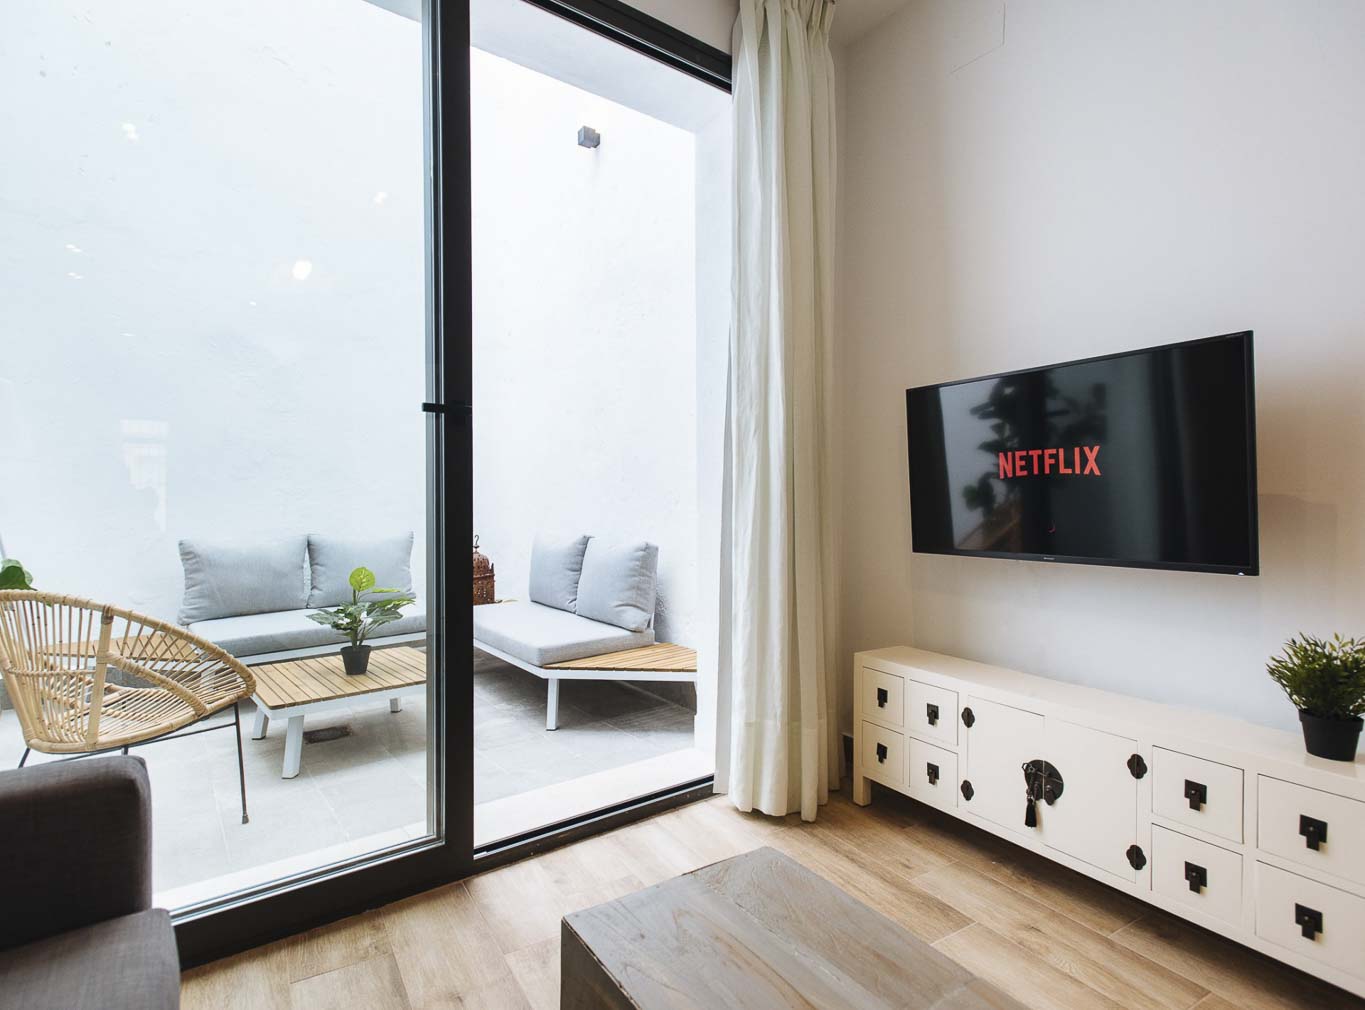 Tourist apartments with Netflix